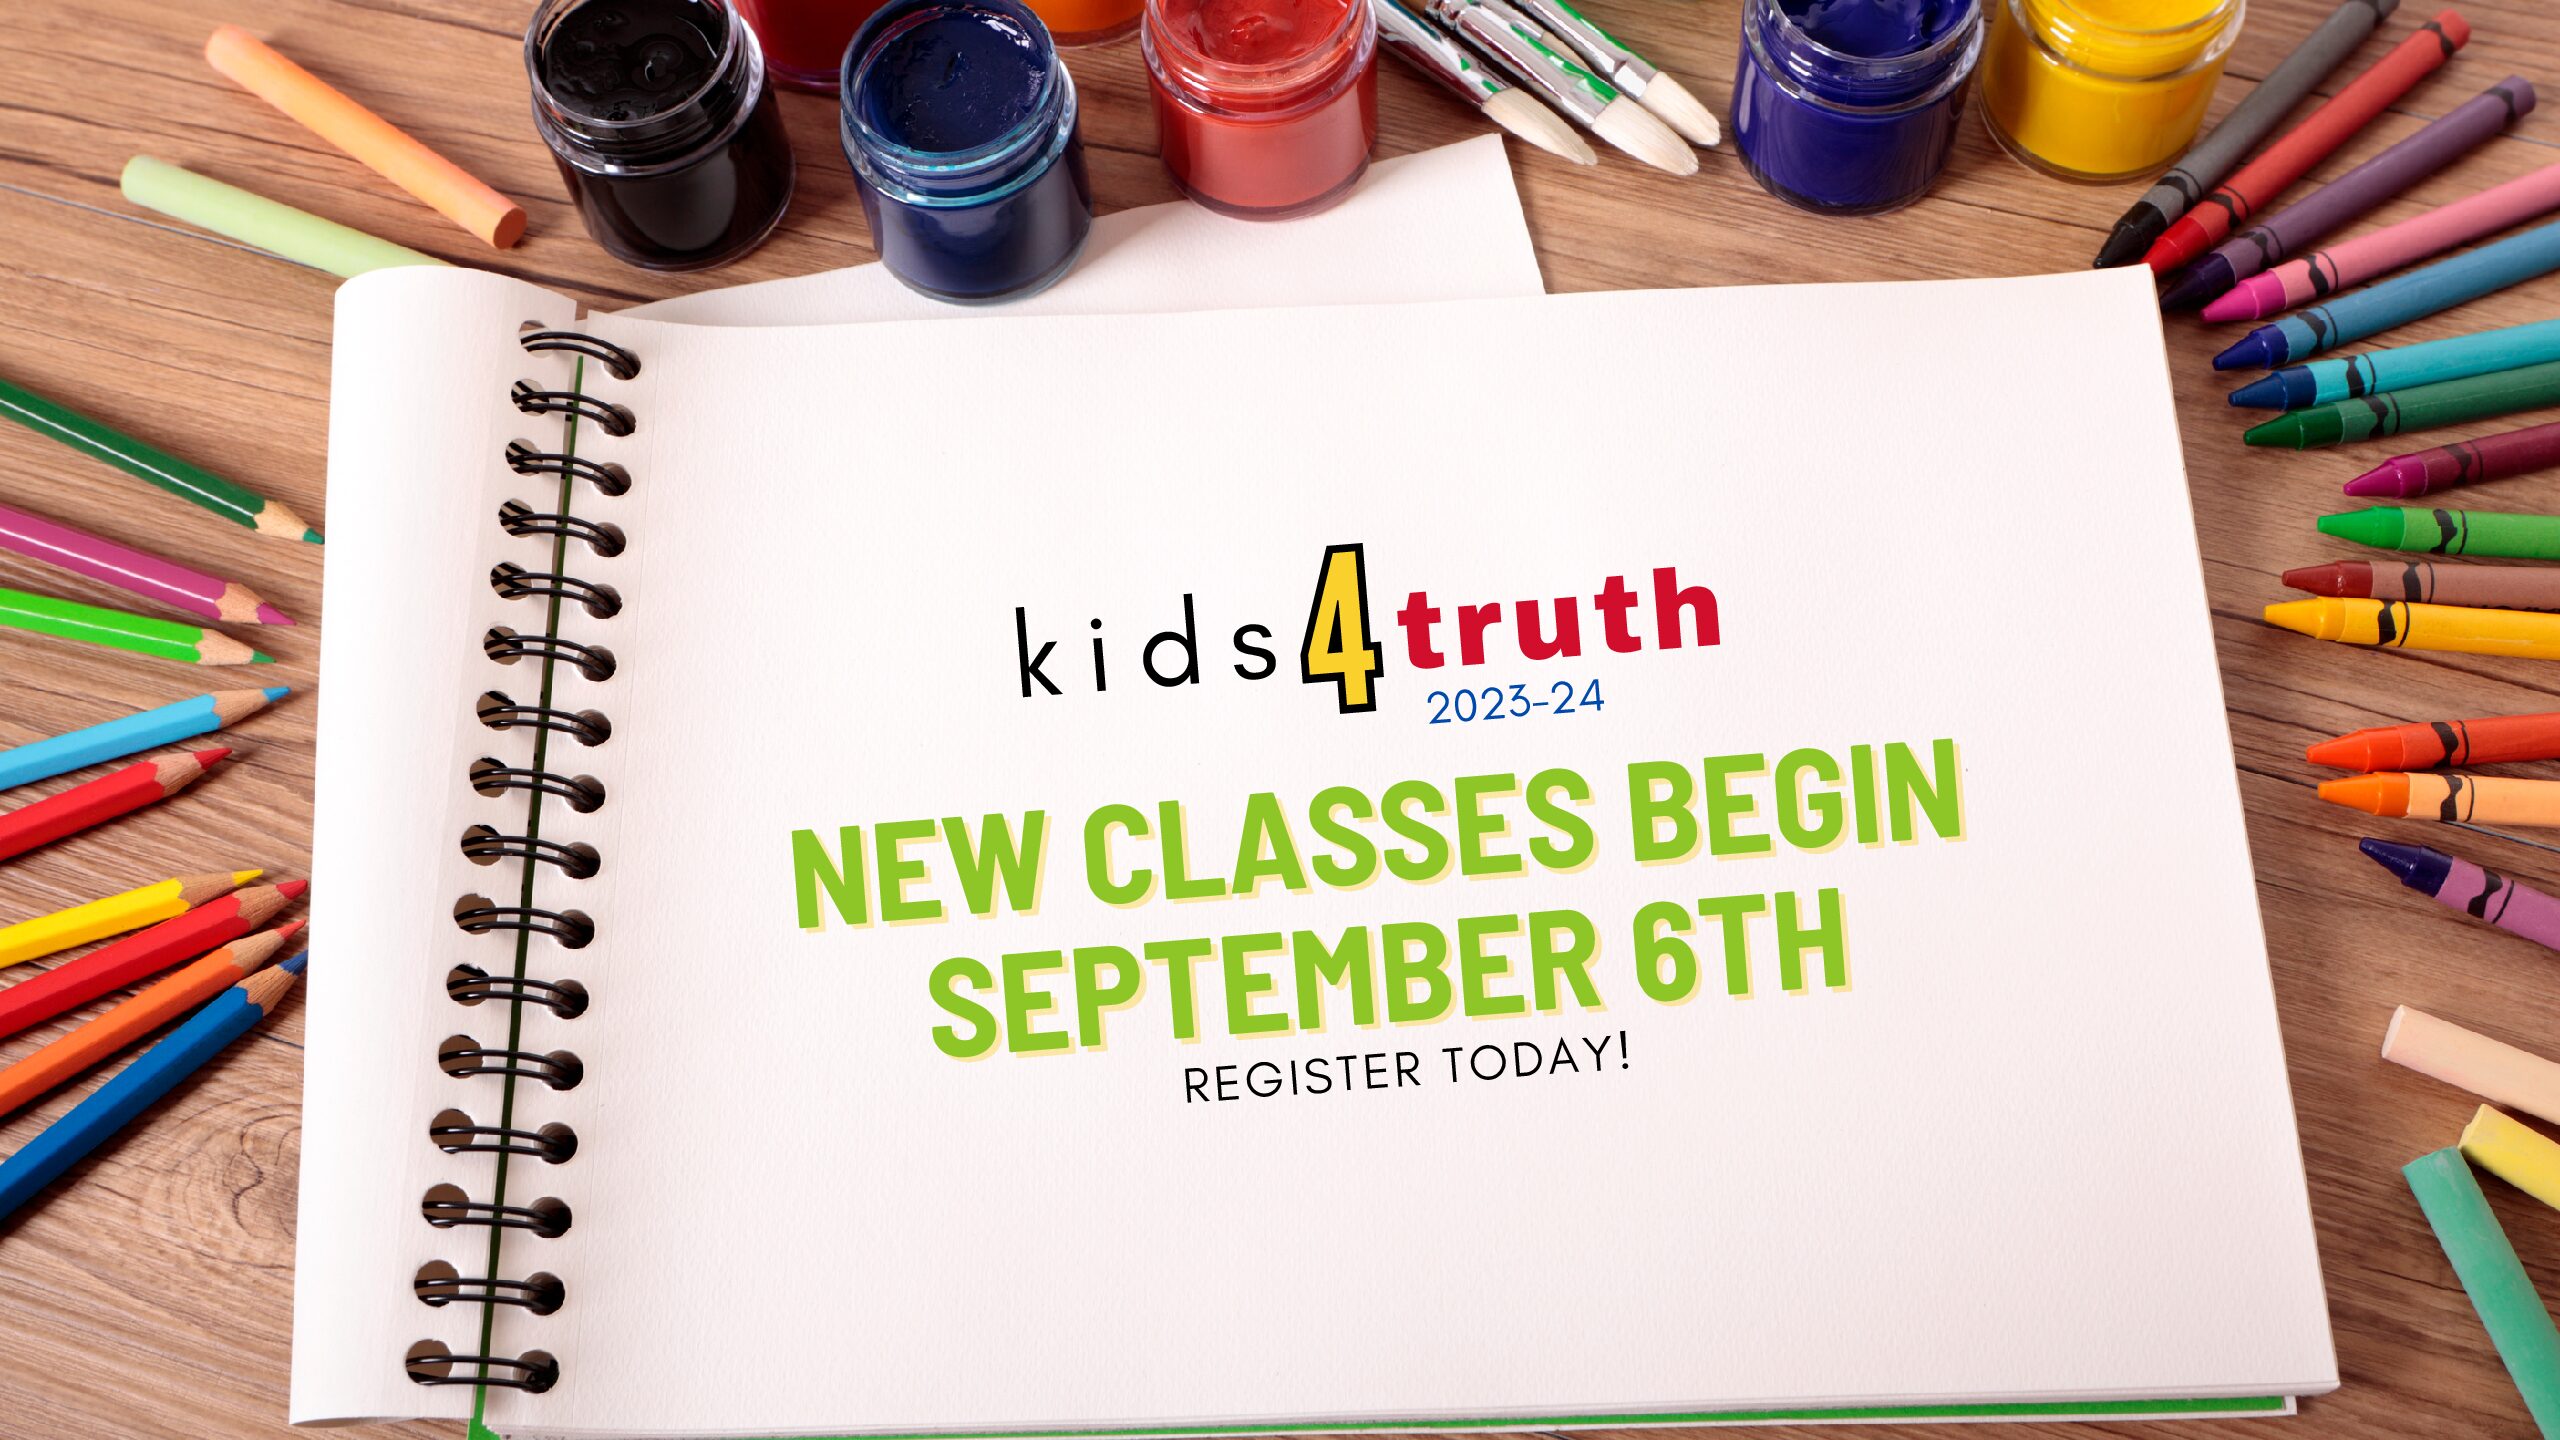 Registration for Kids 4 Truth 2023-24